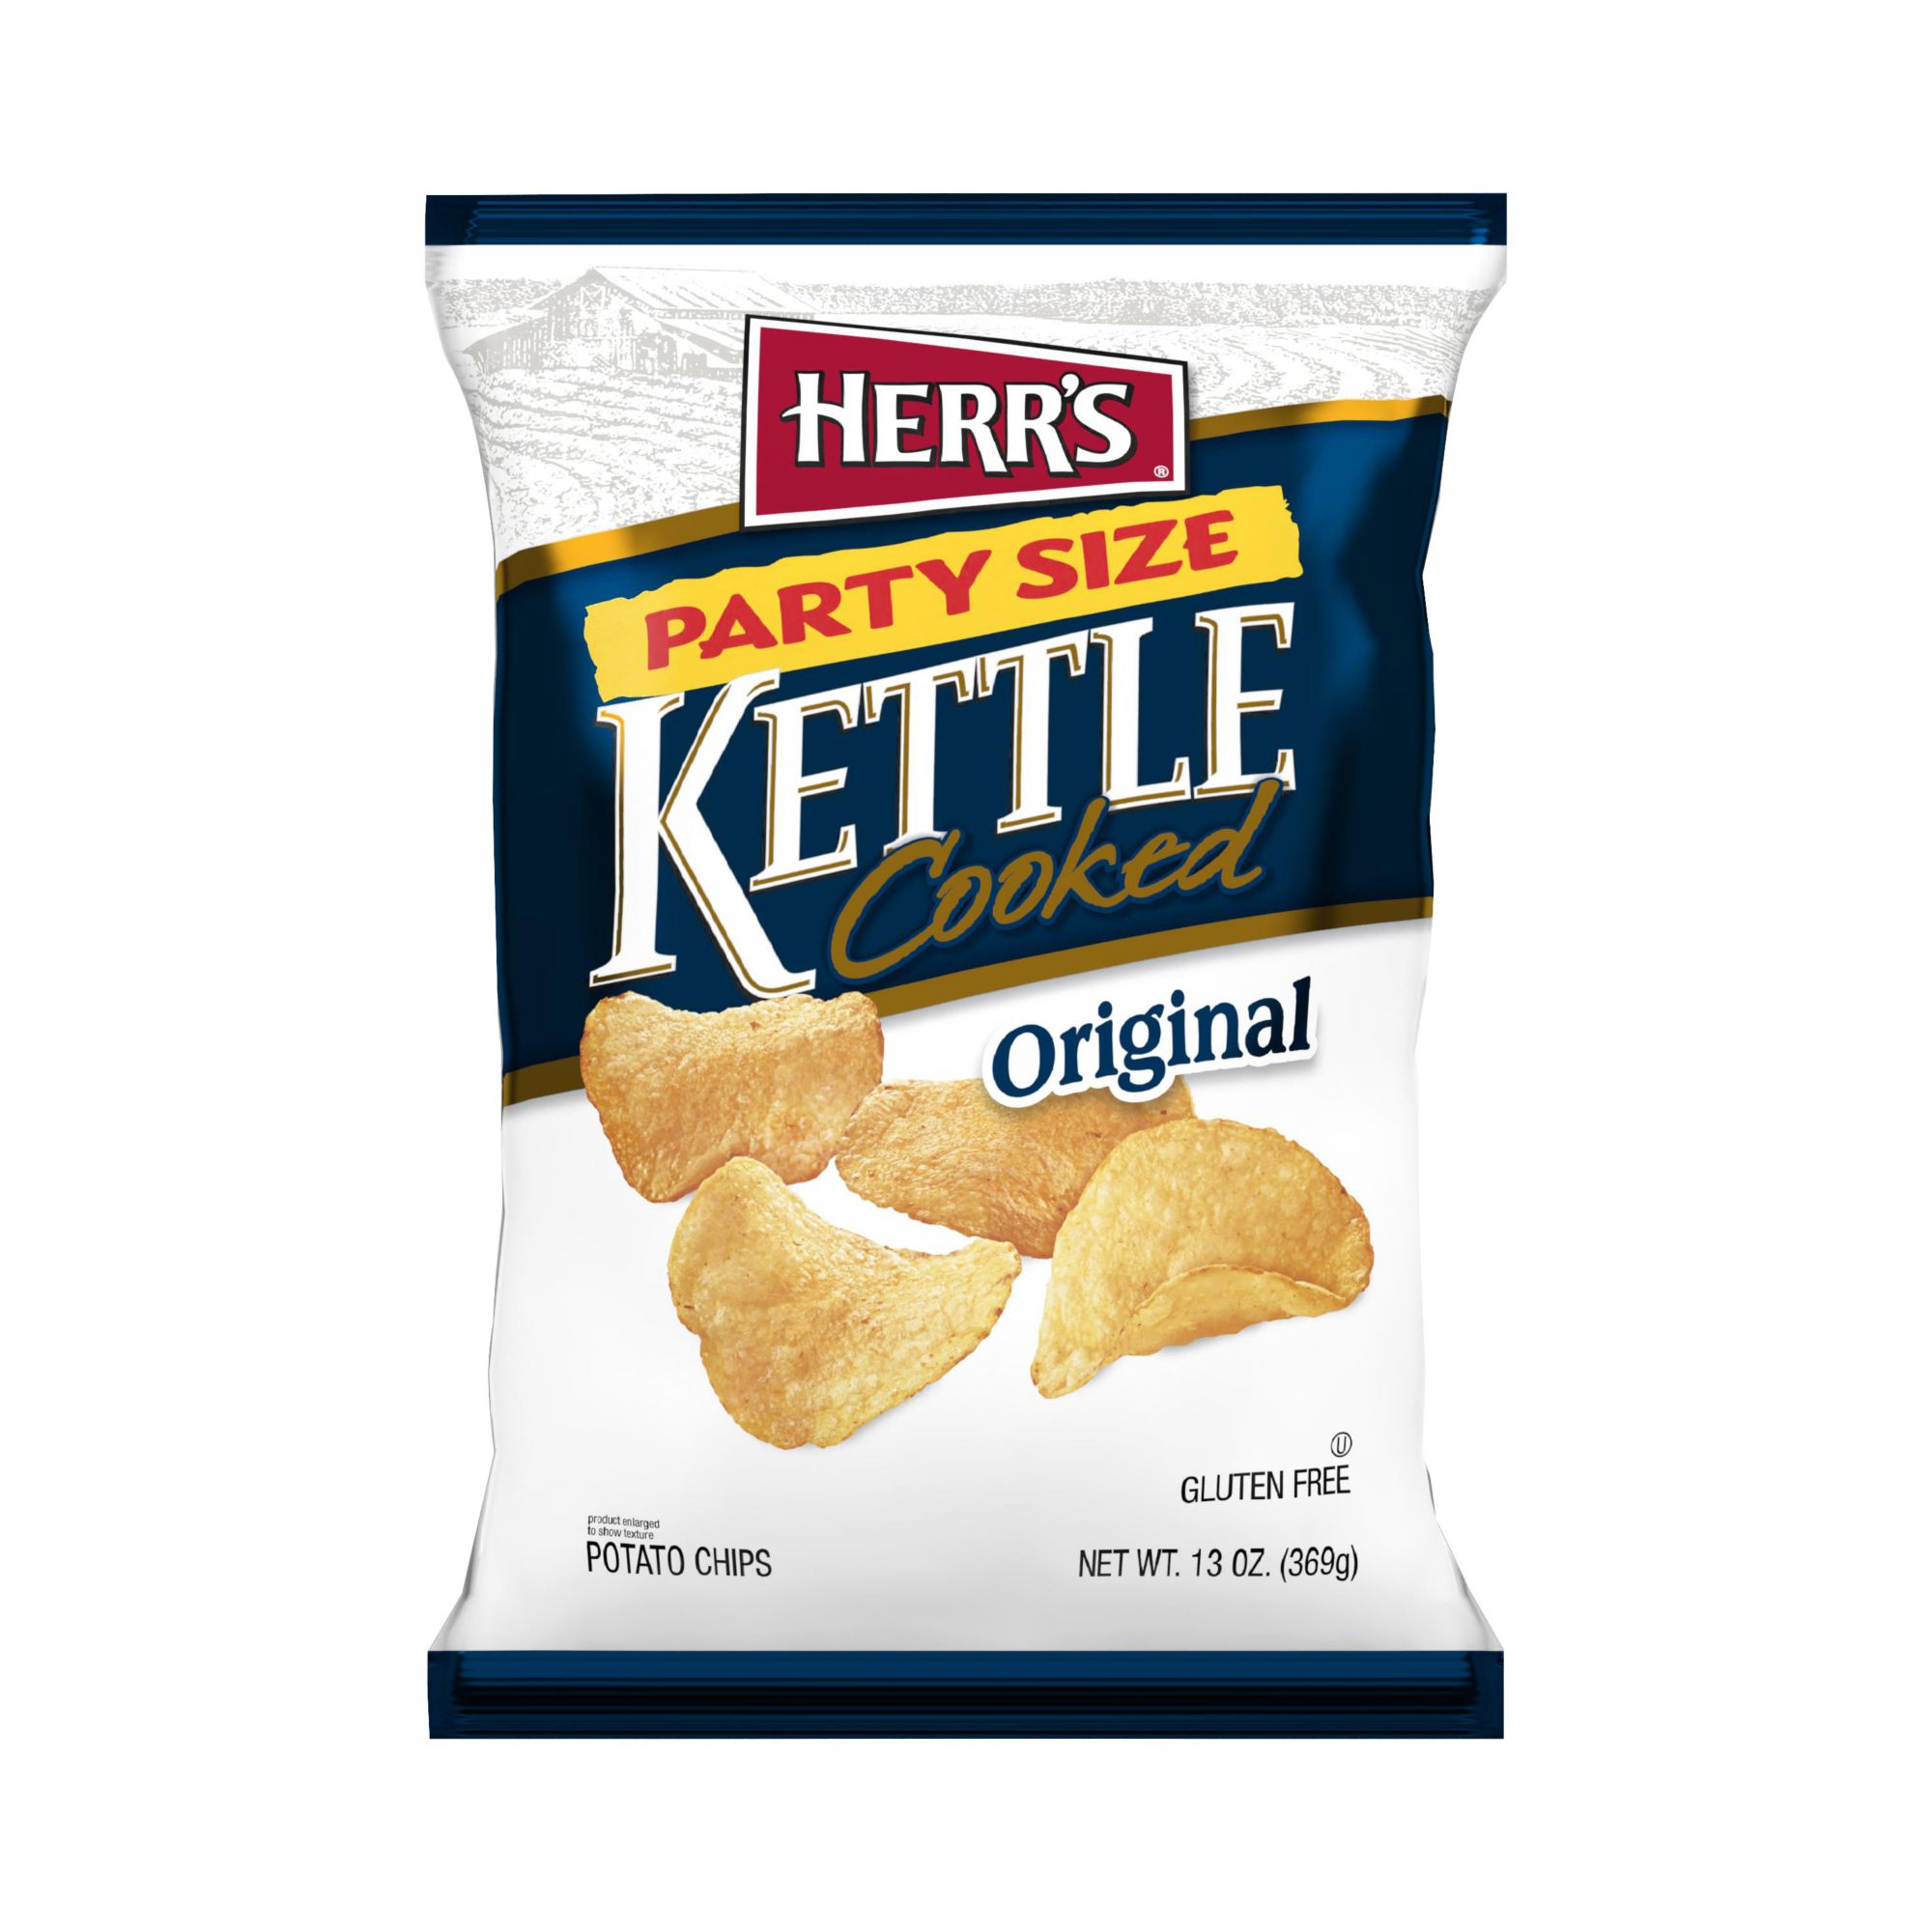 Ohio potato chip maker seeks new ownership